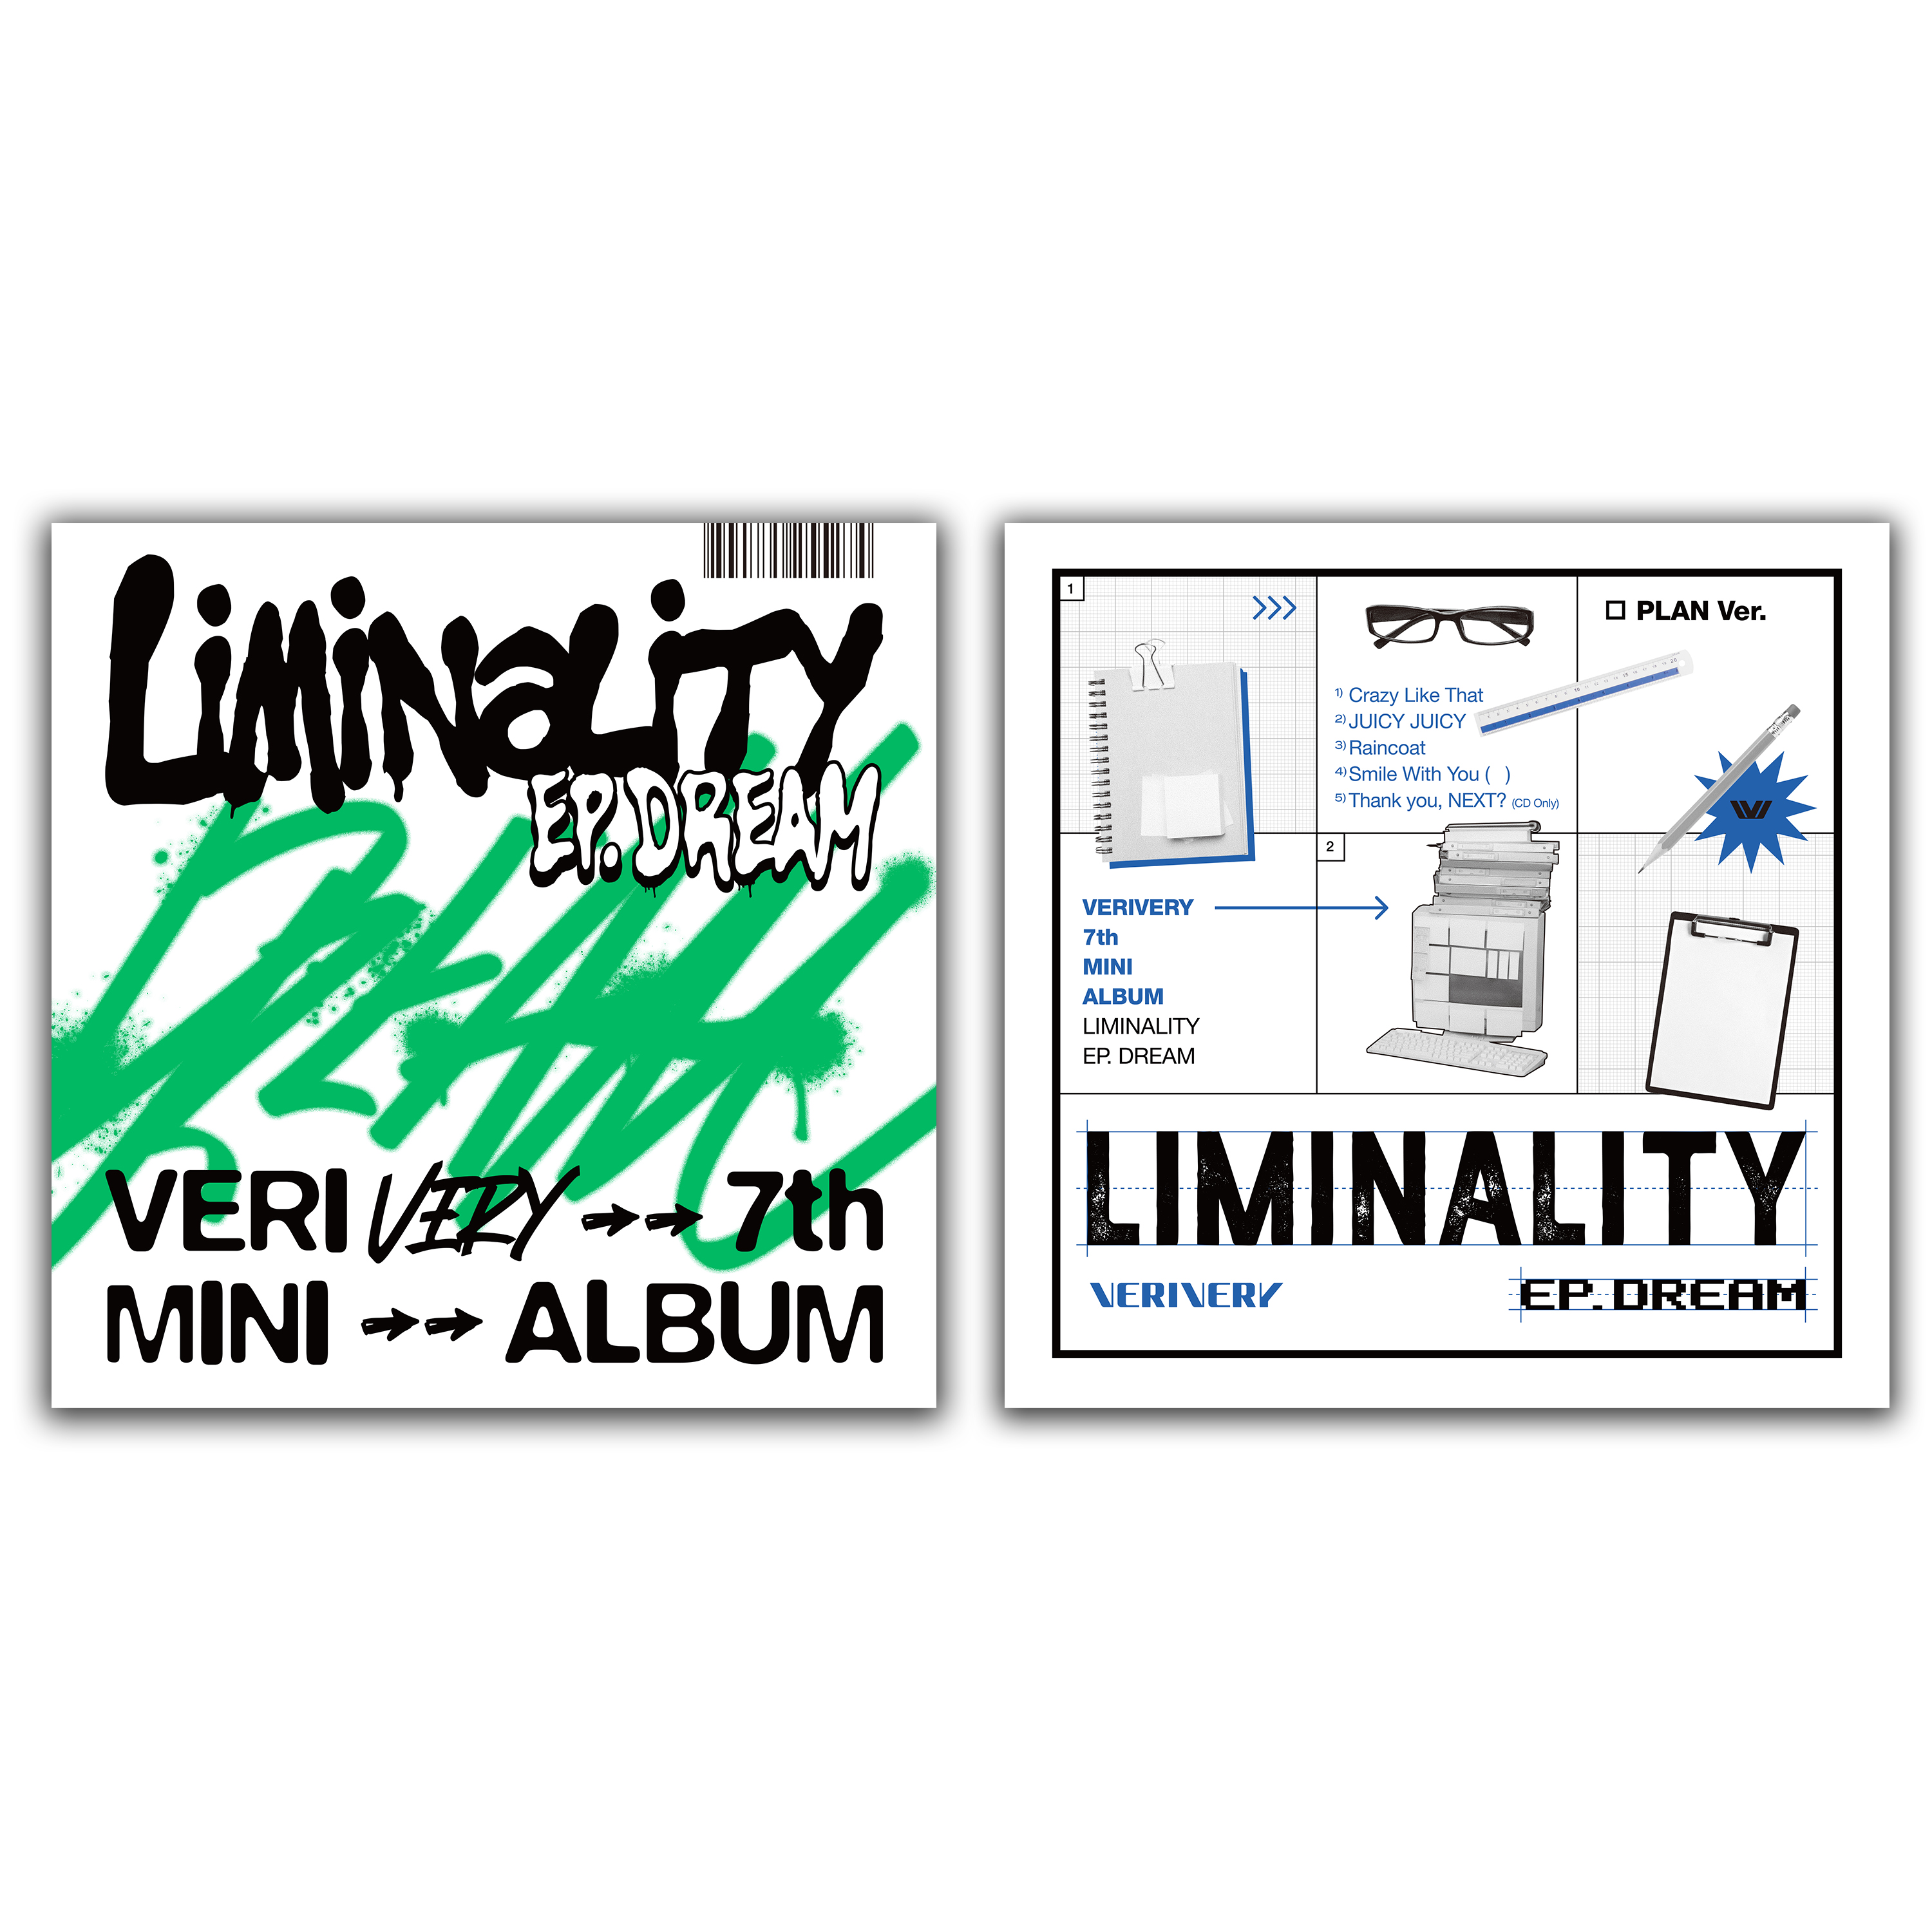 [2CD SET] VERIVERY  - 7th Mini Album [Liminality - EP.DREAM] (PLAY ver. + PLAN ver.) 